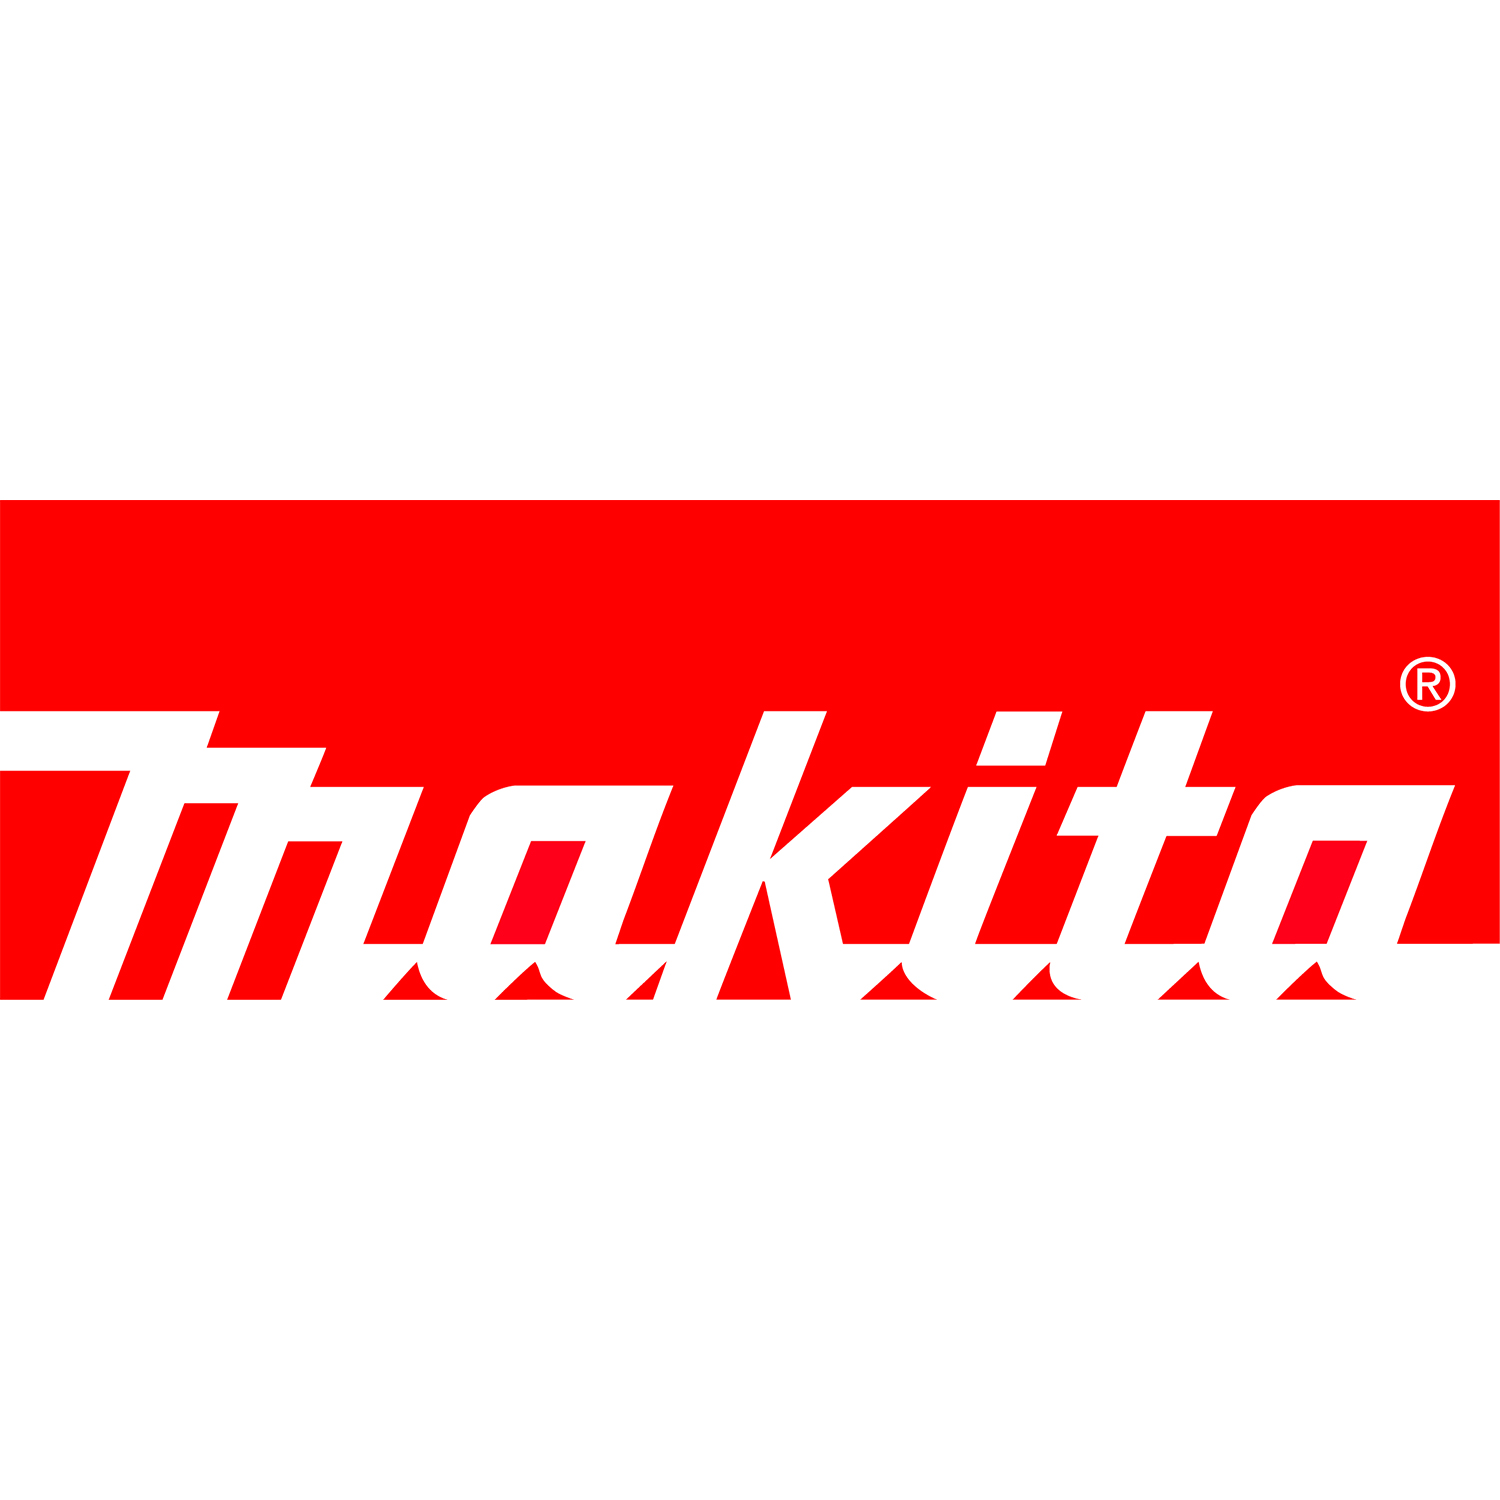 Makita-Logo